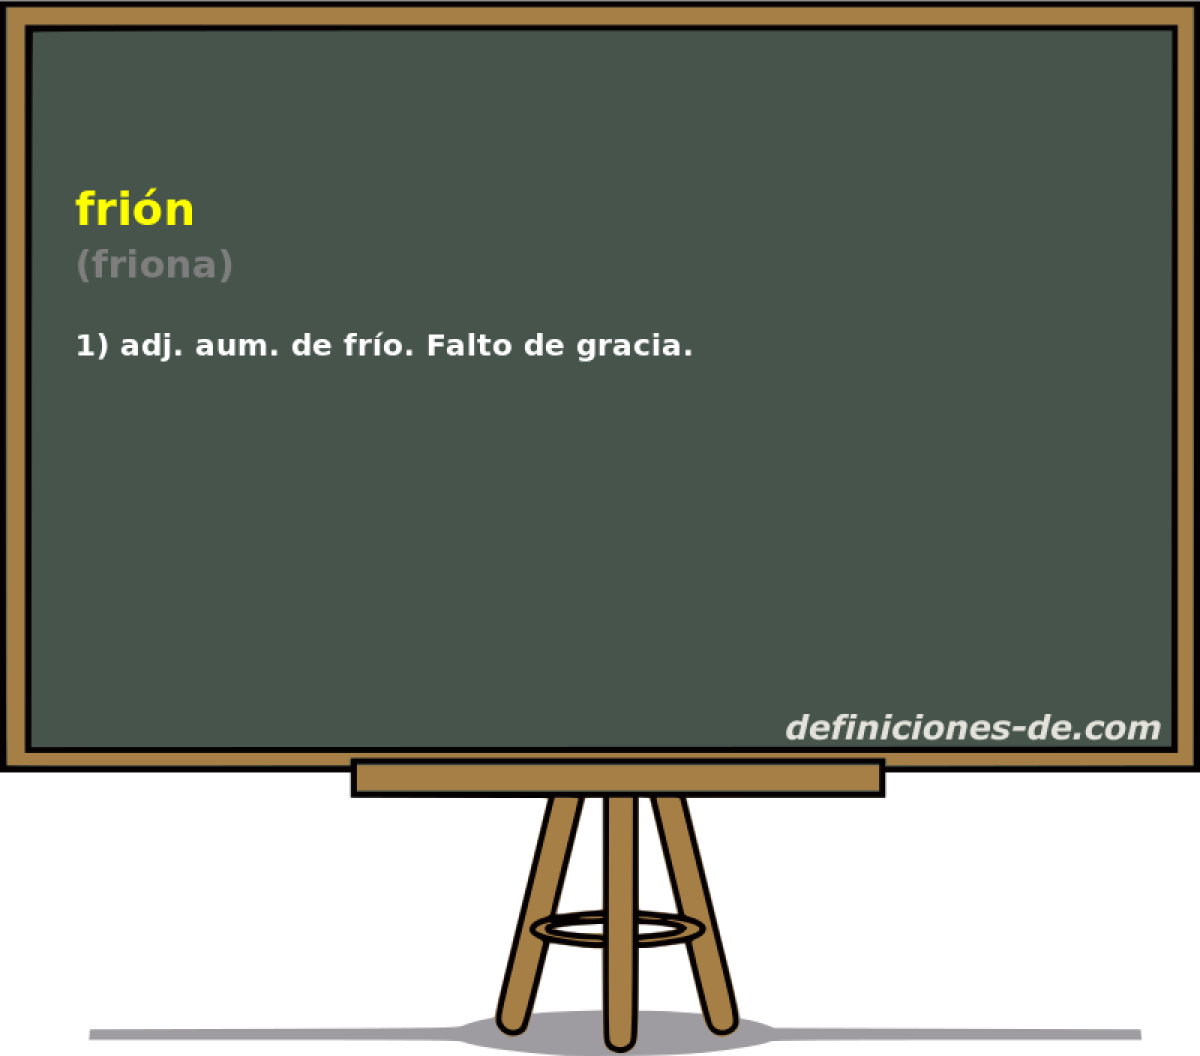 frin (friona)